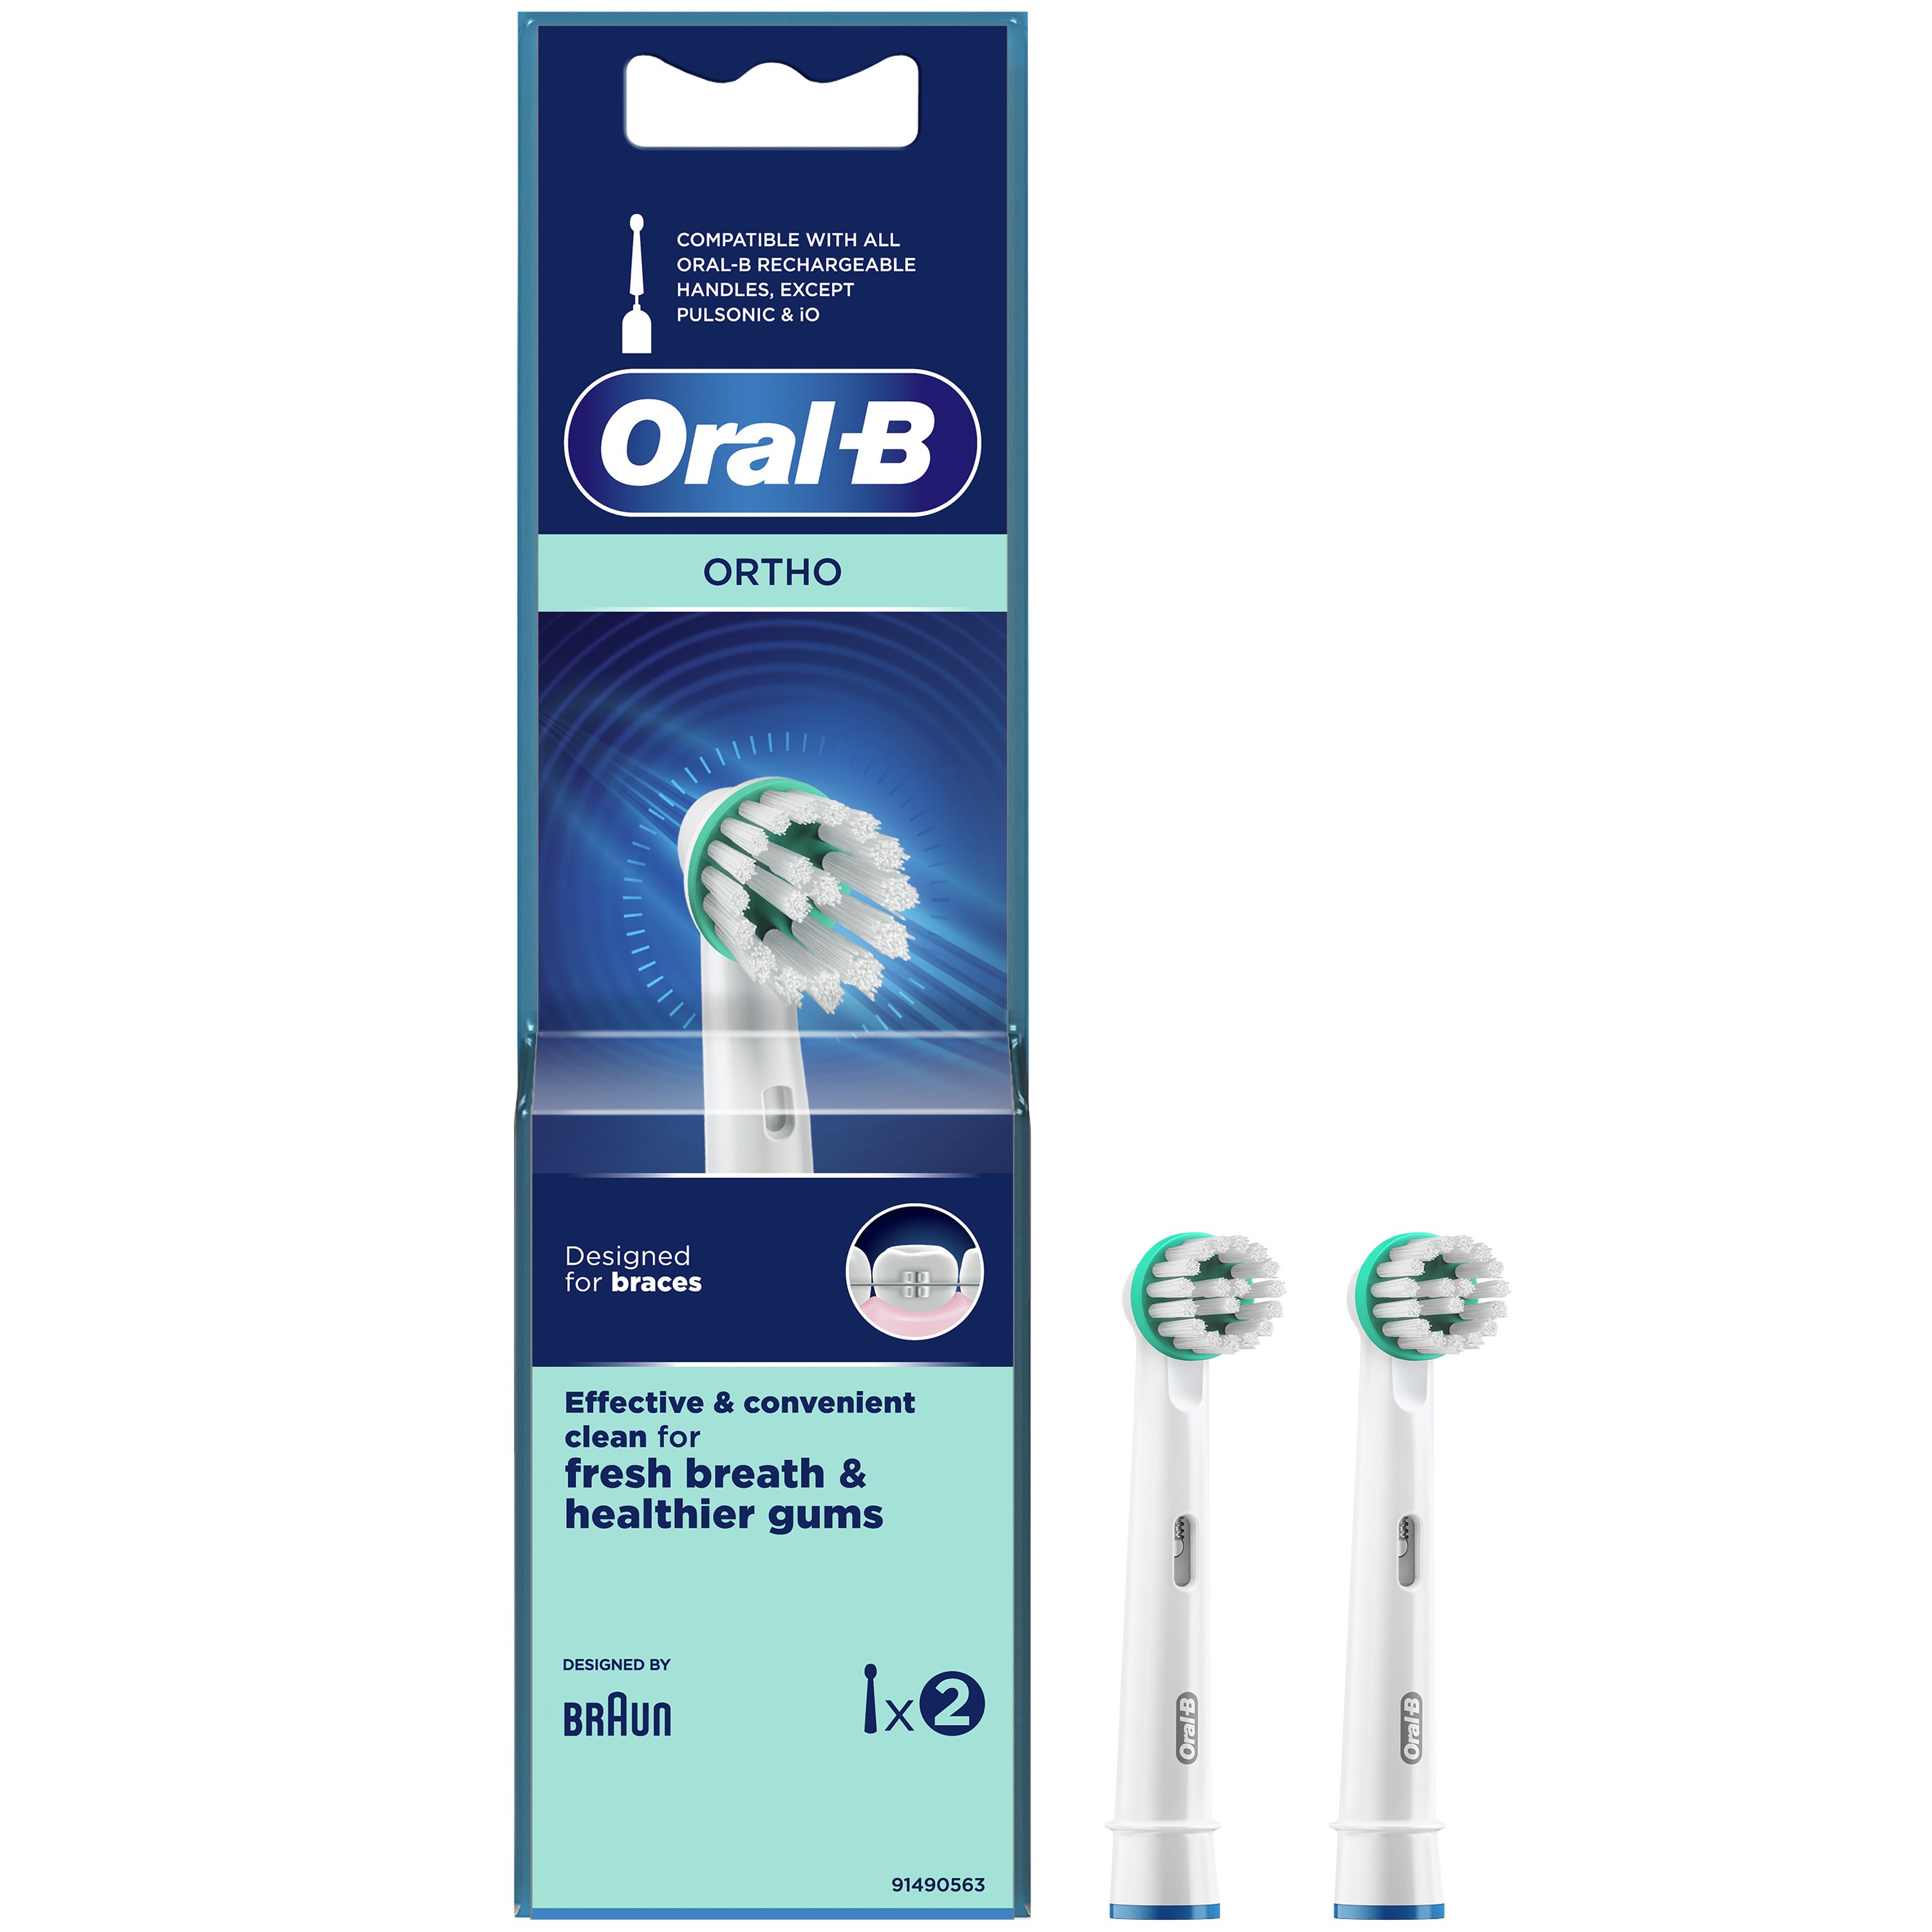 Oral-B Ortho Ανταλλακτικές Ορθοδοντικές Κεφαλές Βουρτσίσματος Ειδικά Σχεδιασμένες για τα Σιδεράκια 2 Τεμάχια